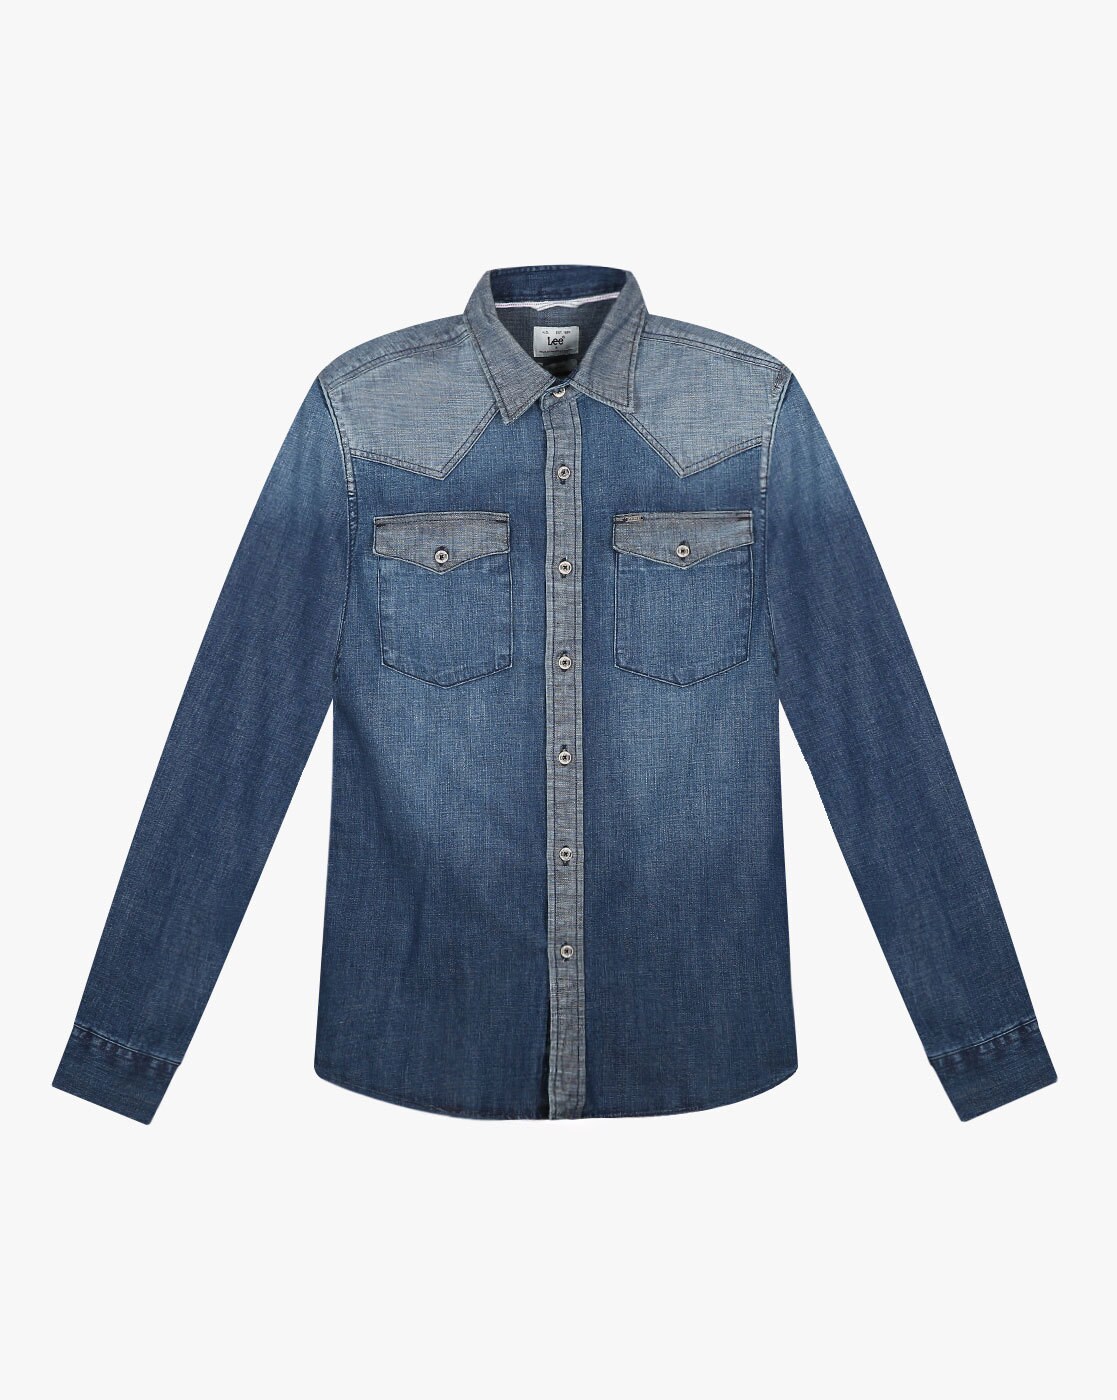 Buy Lee Jeans Western Shirt SS - Denim Blue | NLYMAN